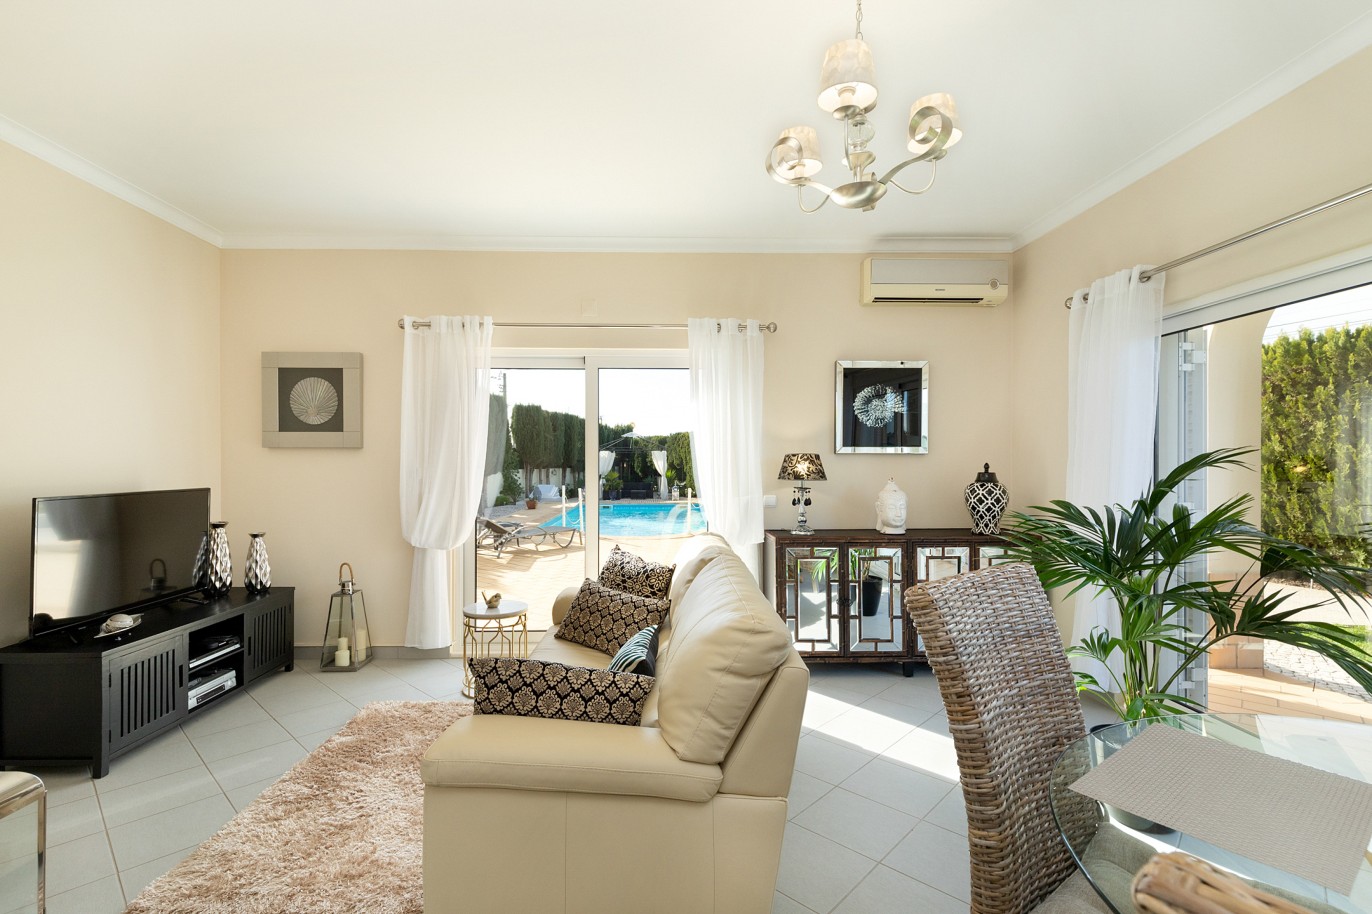 Fantastic 3 bedroom villa with pool, for sale in Algoz, Algarve_215658